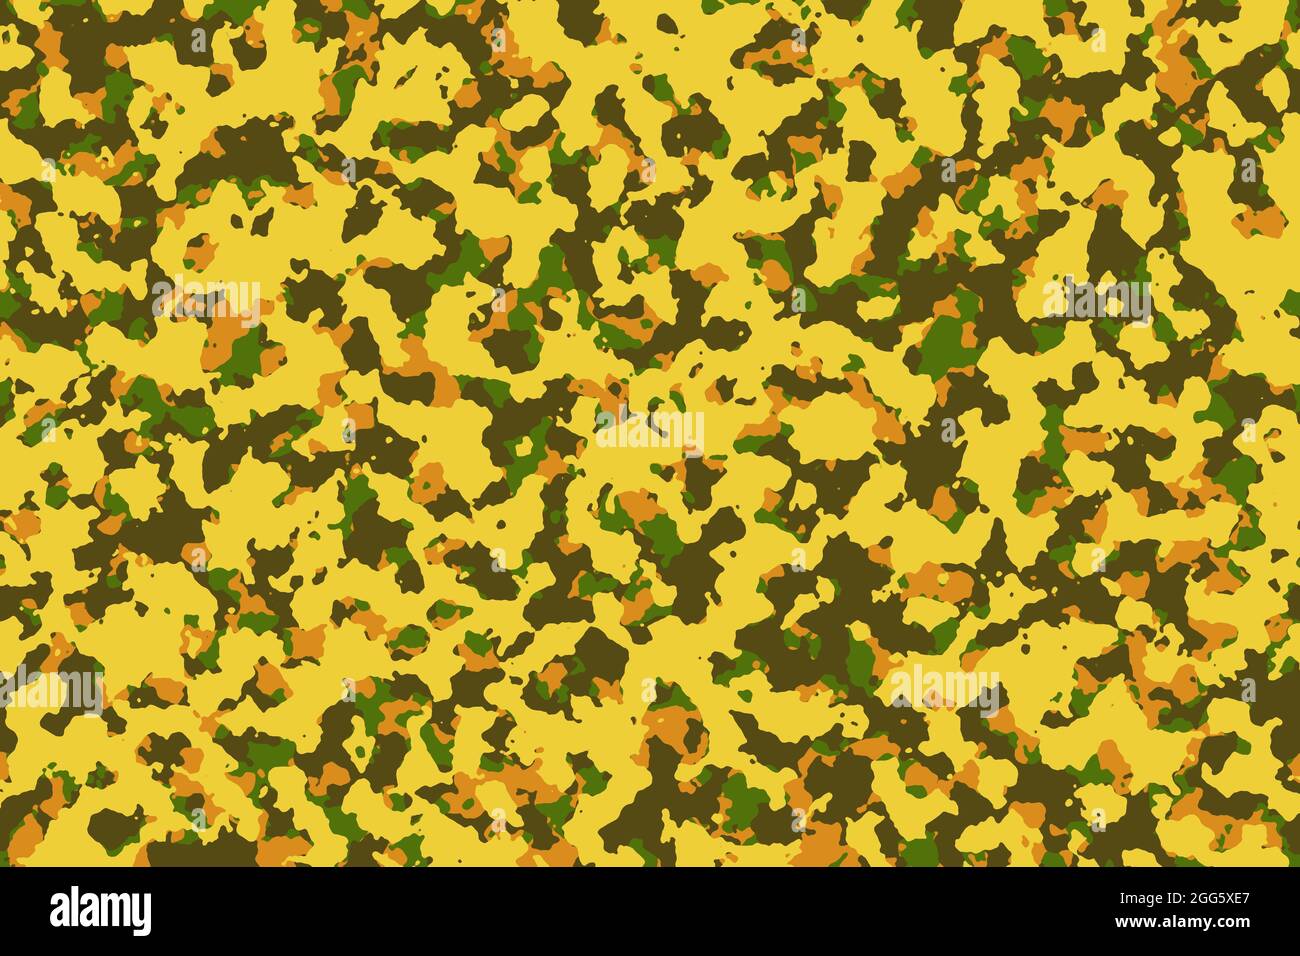 Military camouflage green, yellow, beige pattern. Desert military uniform pattern Stock Photo